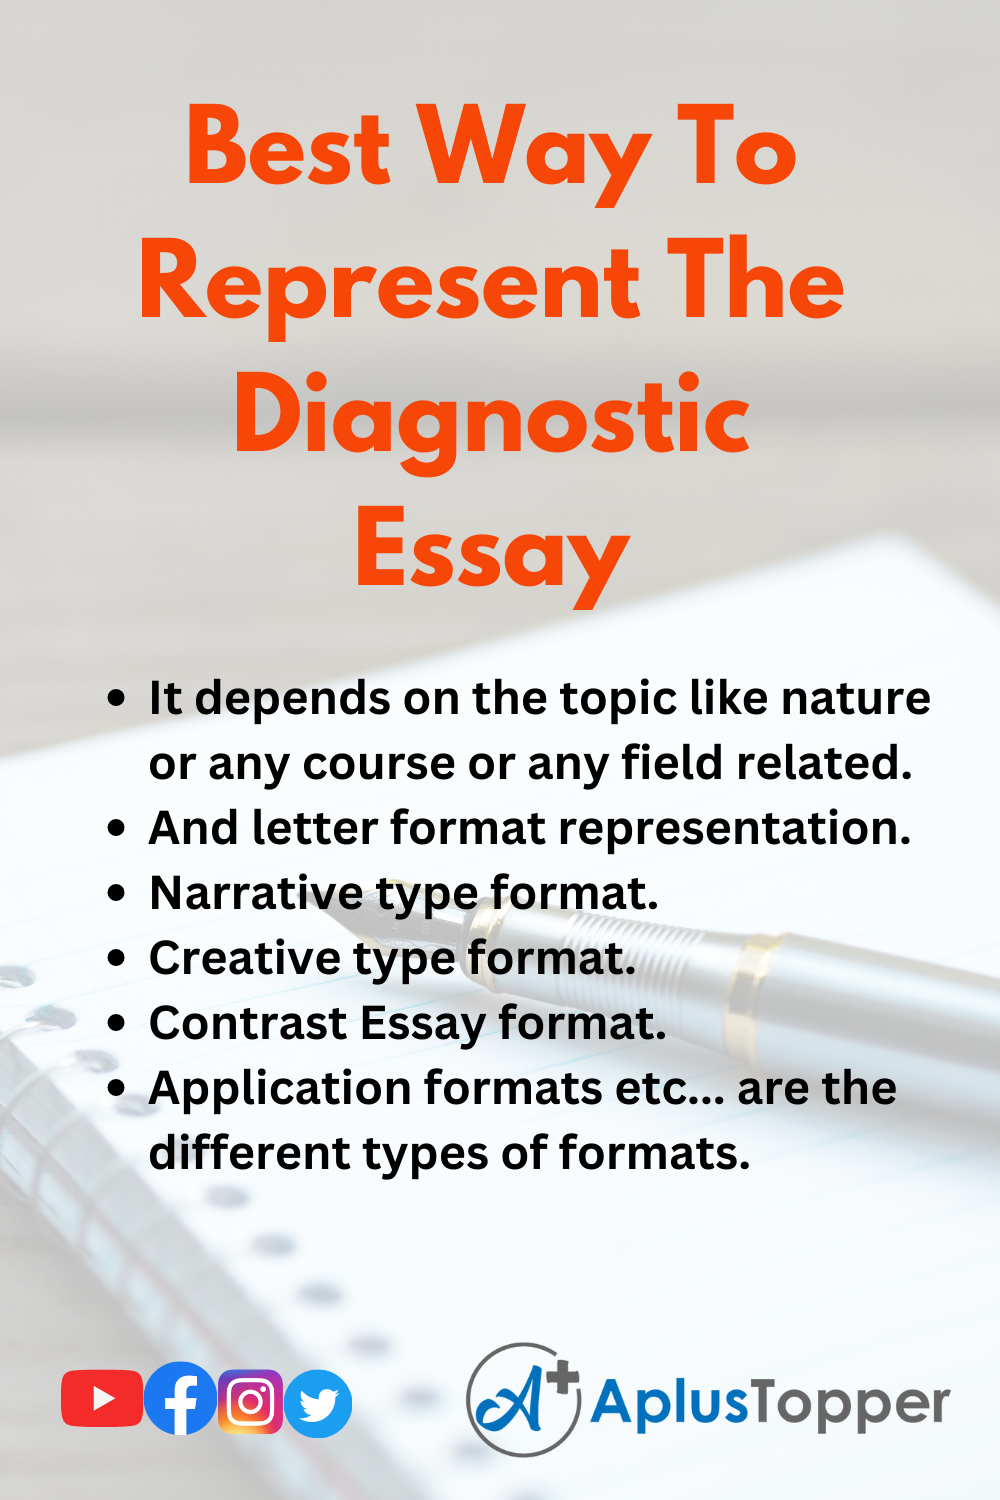 Best Way To Represent The Diagnostic Essay